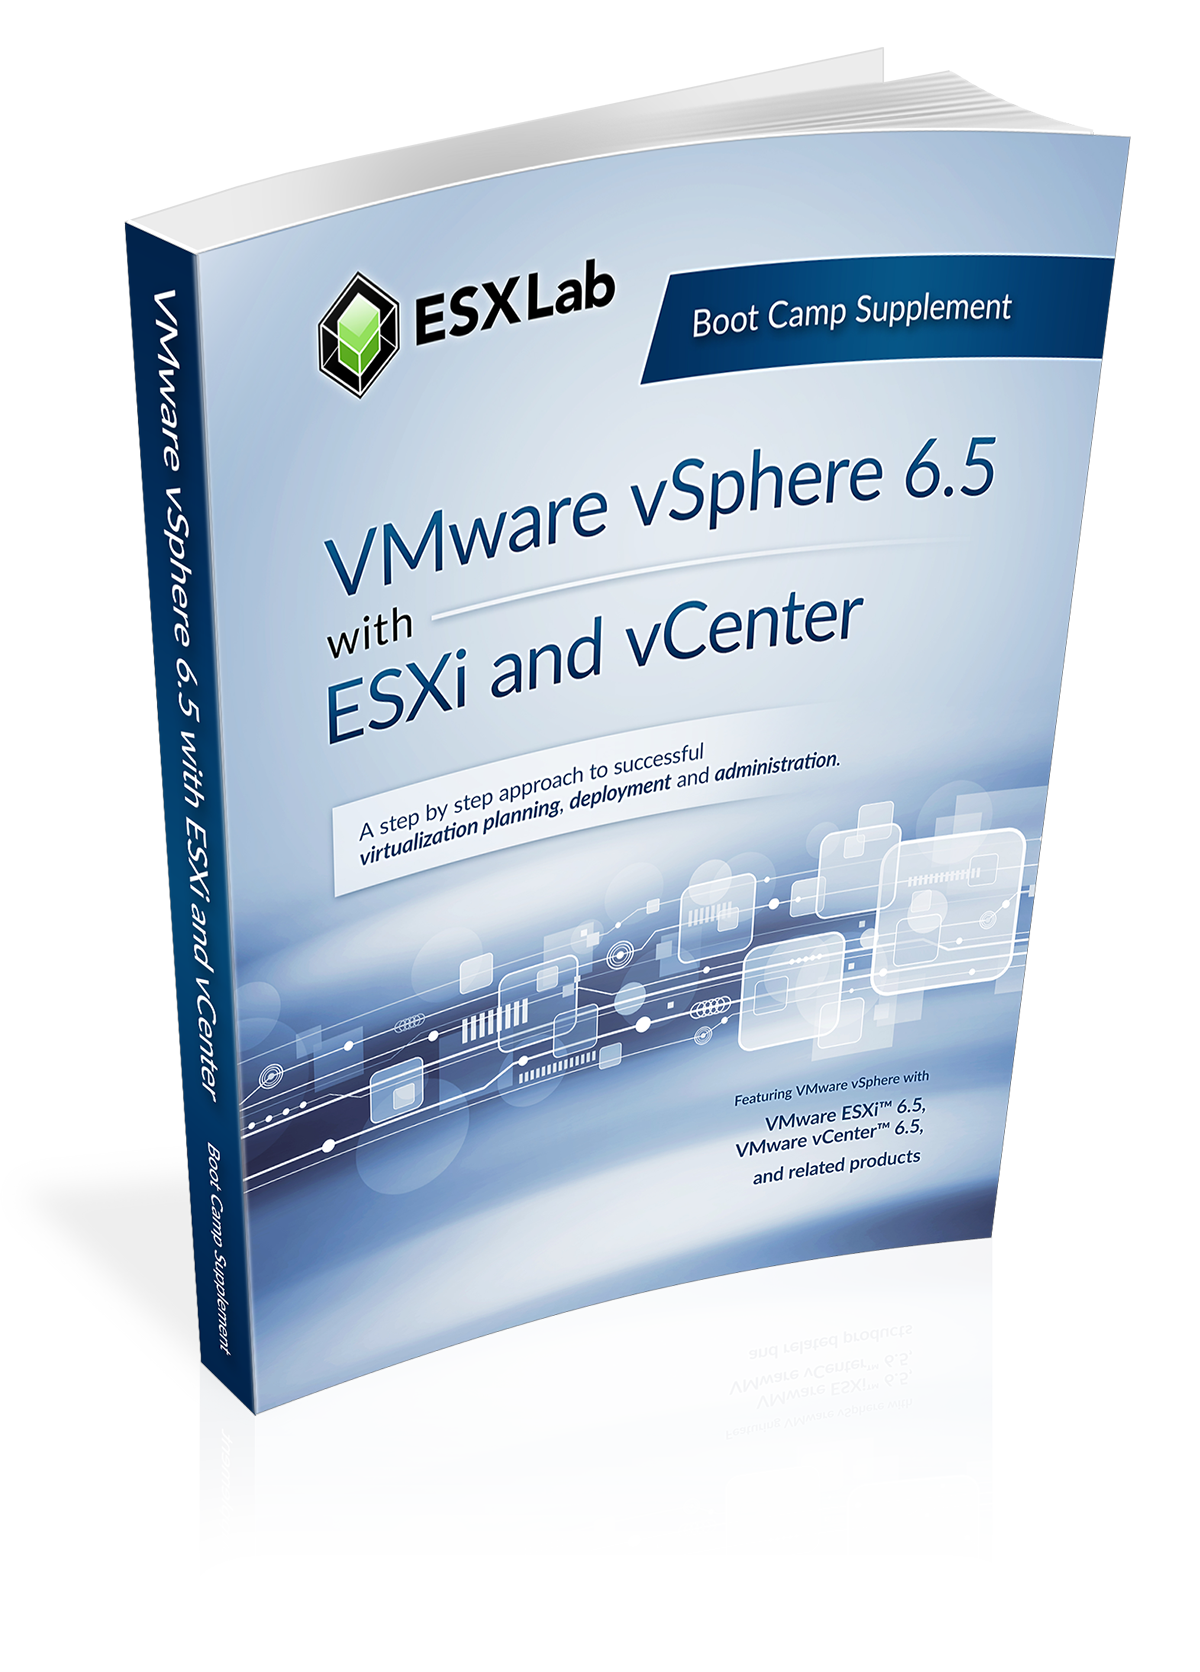 VMware vSphere 6.5 Boot Camp Supplement Guide